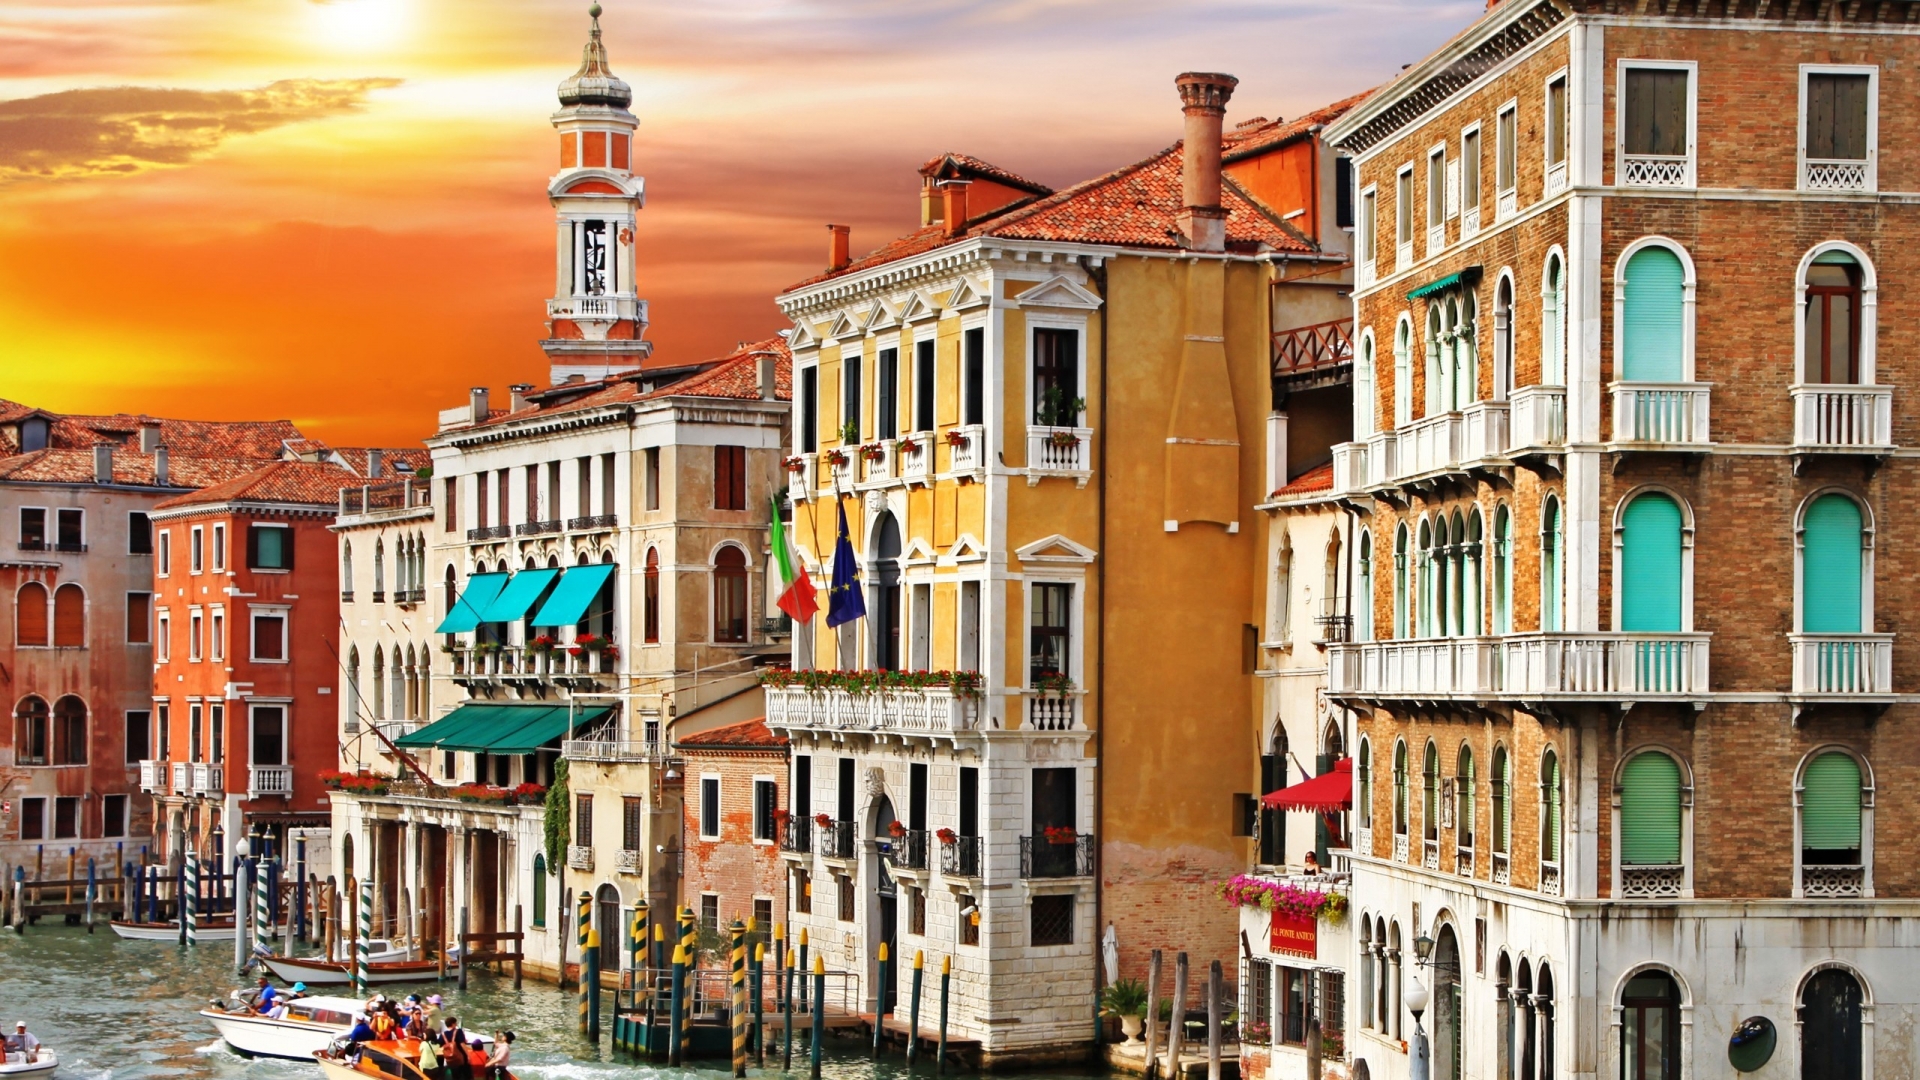 Colorful Venice Corner for 1920 x 1080 HDTV 1080p resolution